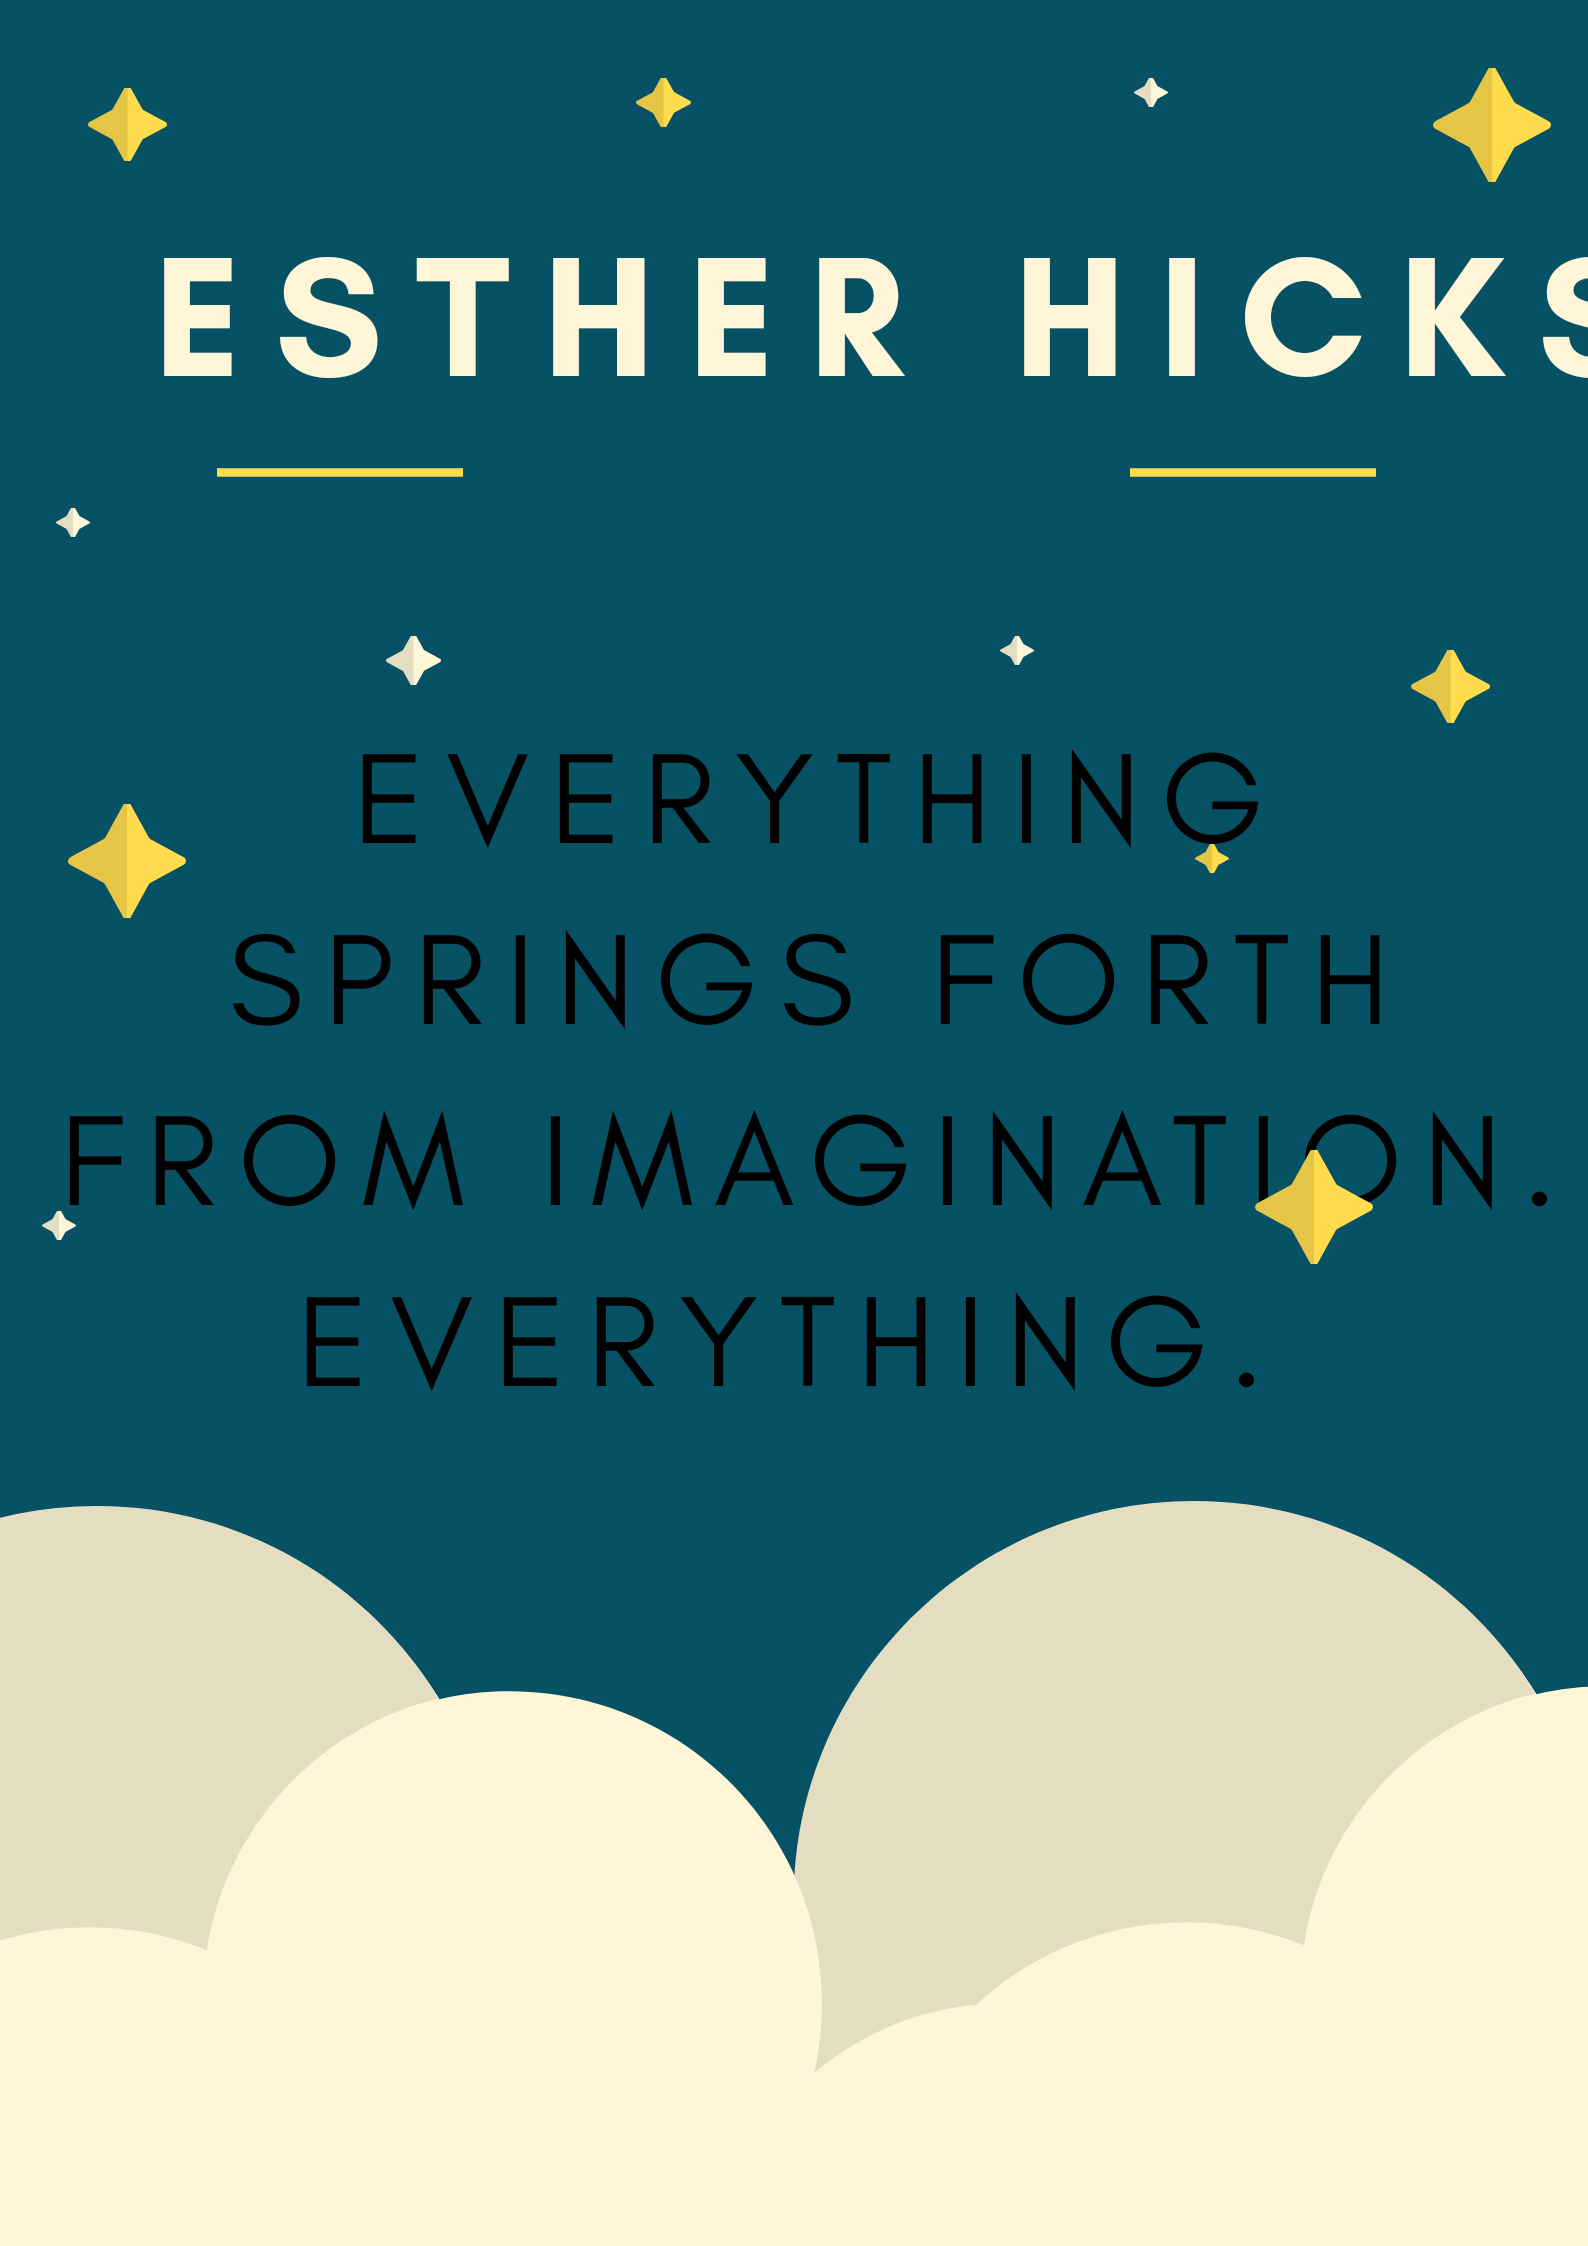 esther hicks quotes-imagination